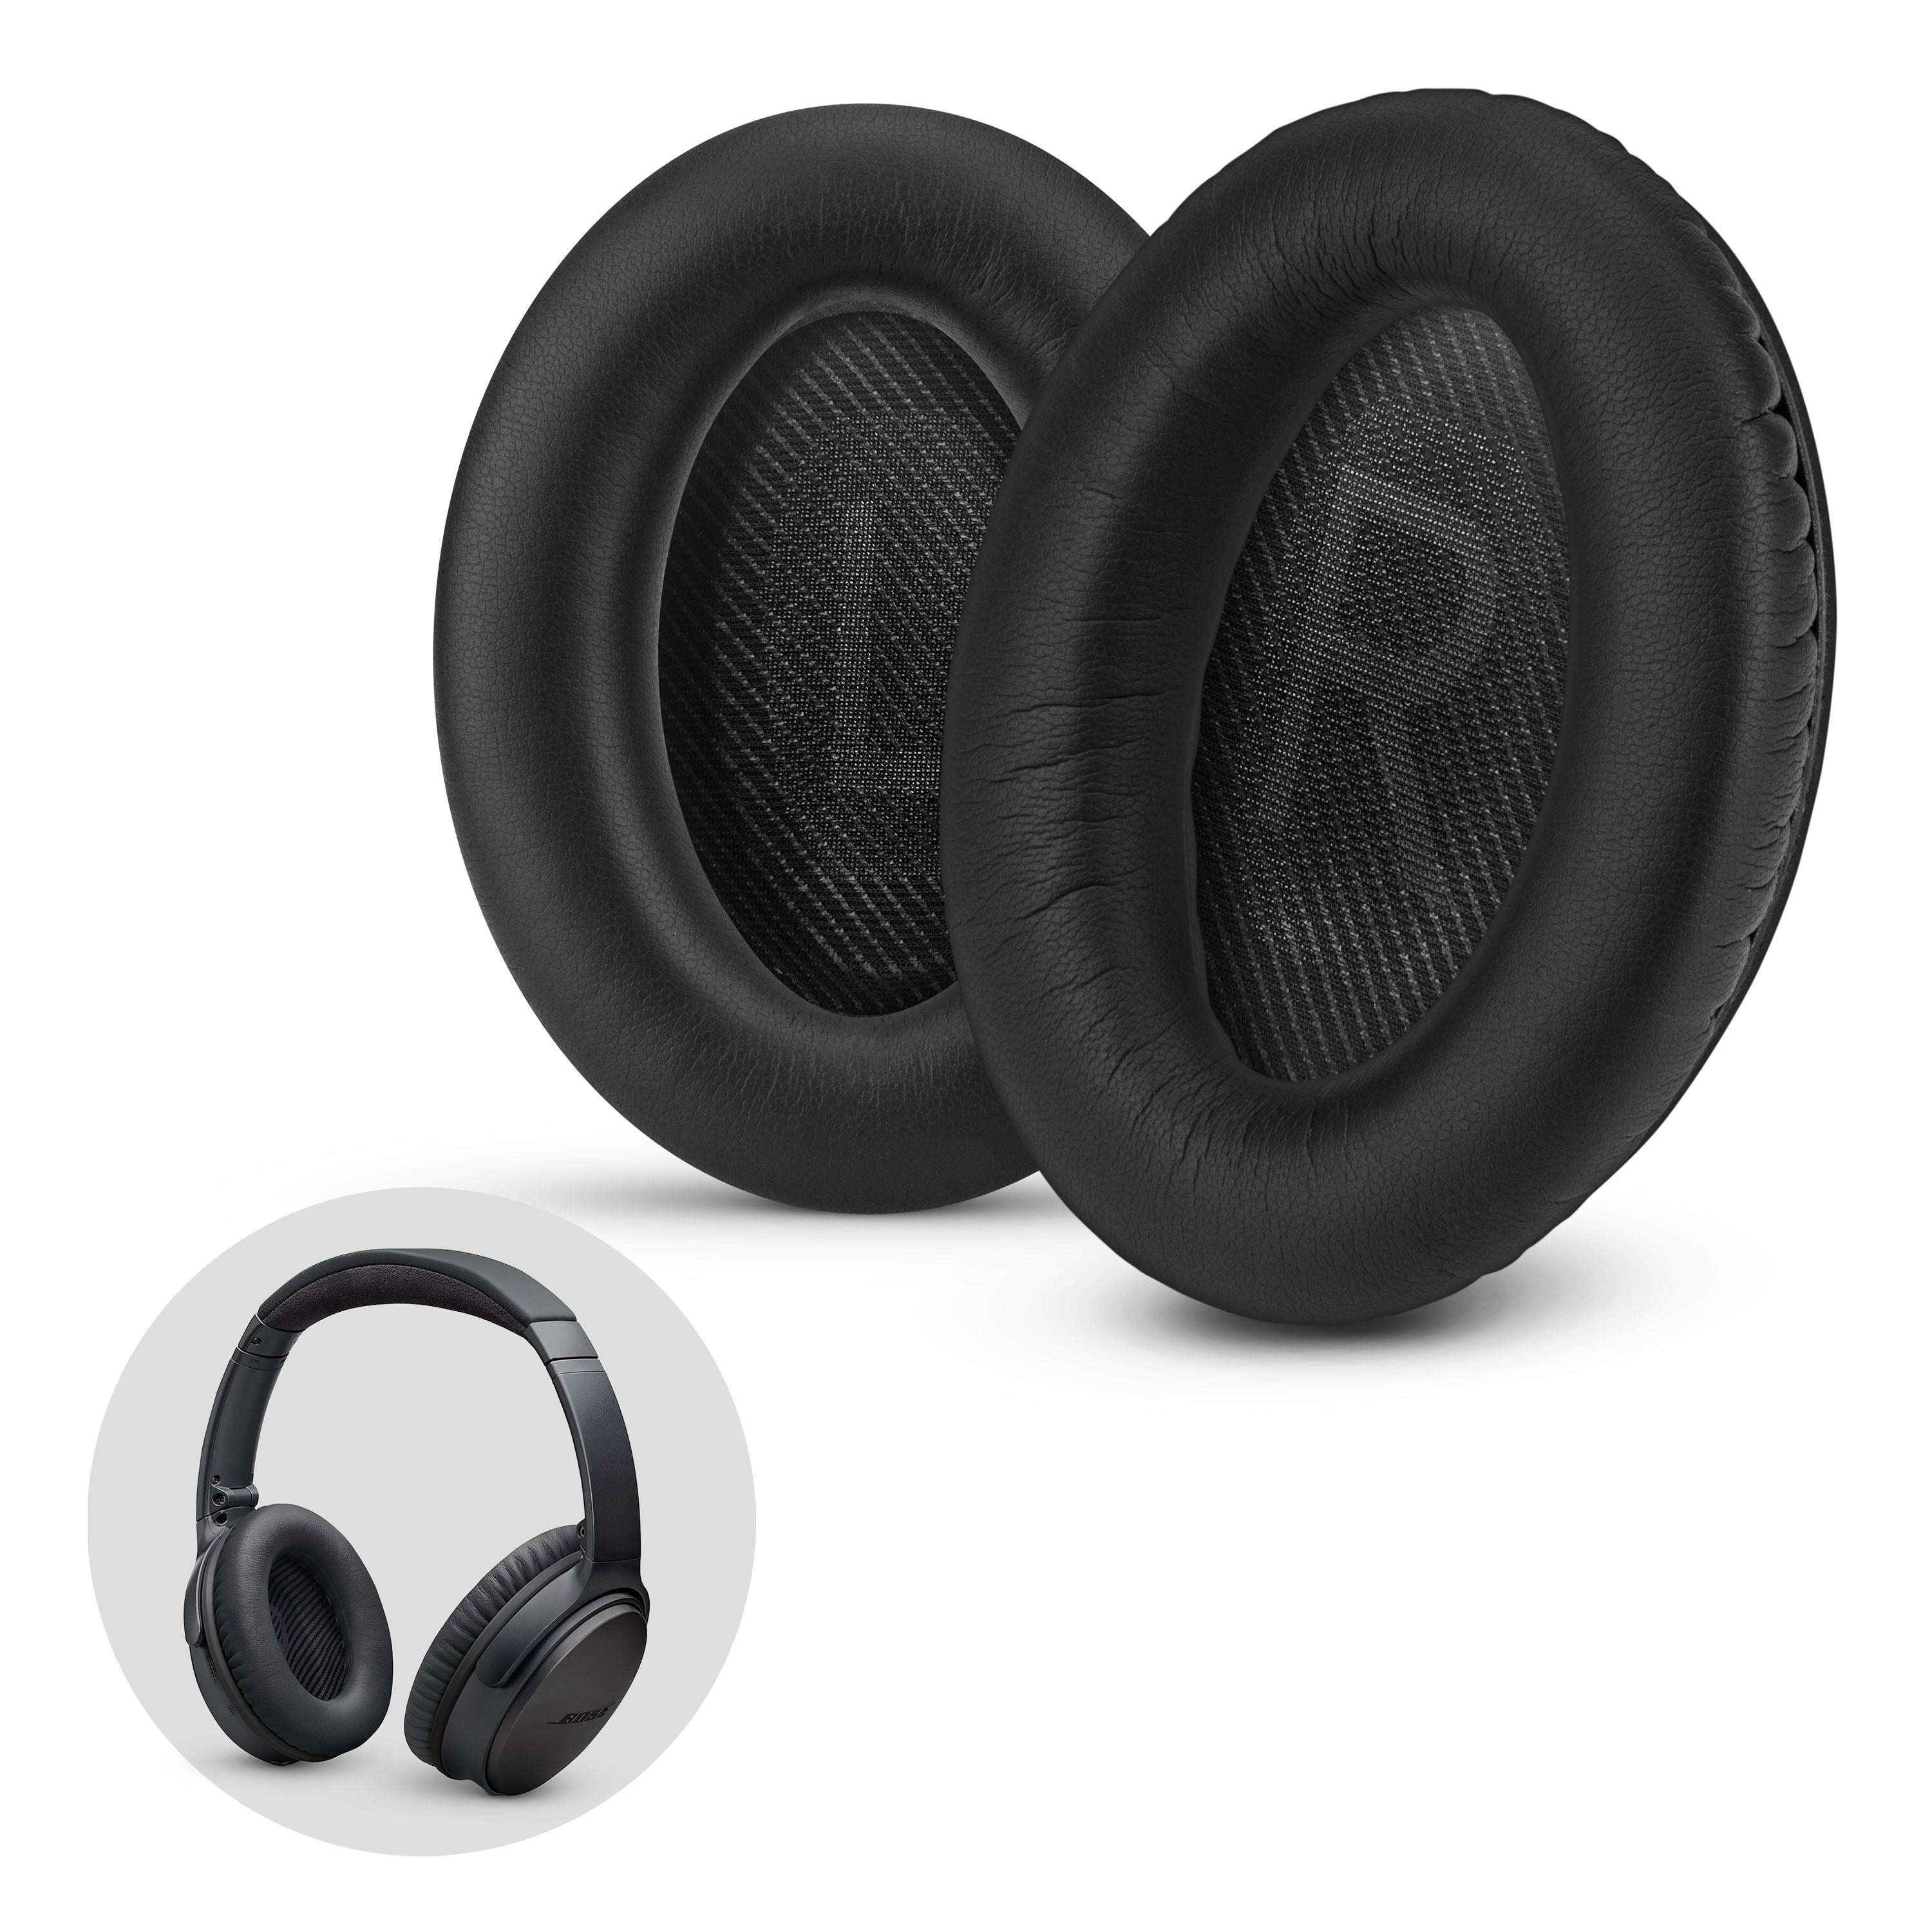 Bose Ear Cushion Kit for QuietComfort 35 Headphones Pair